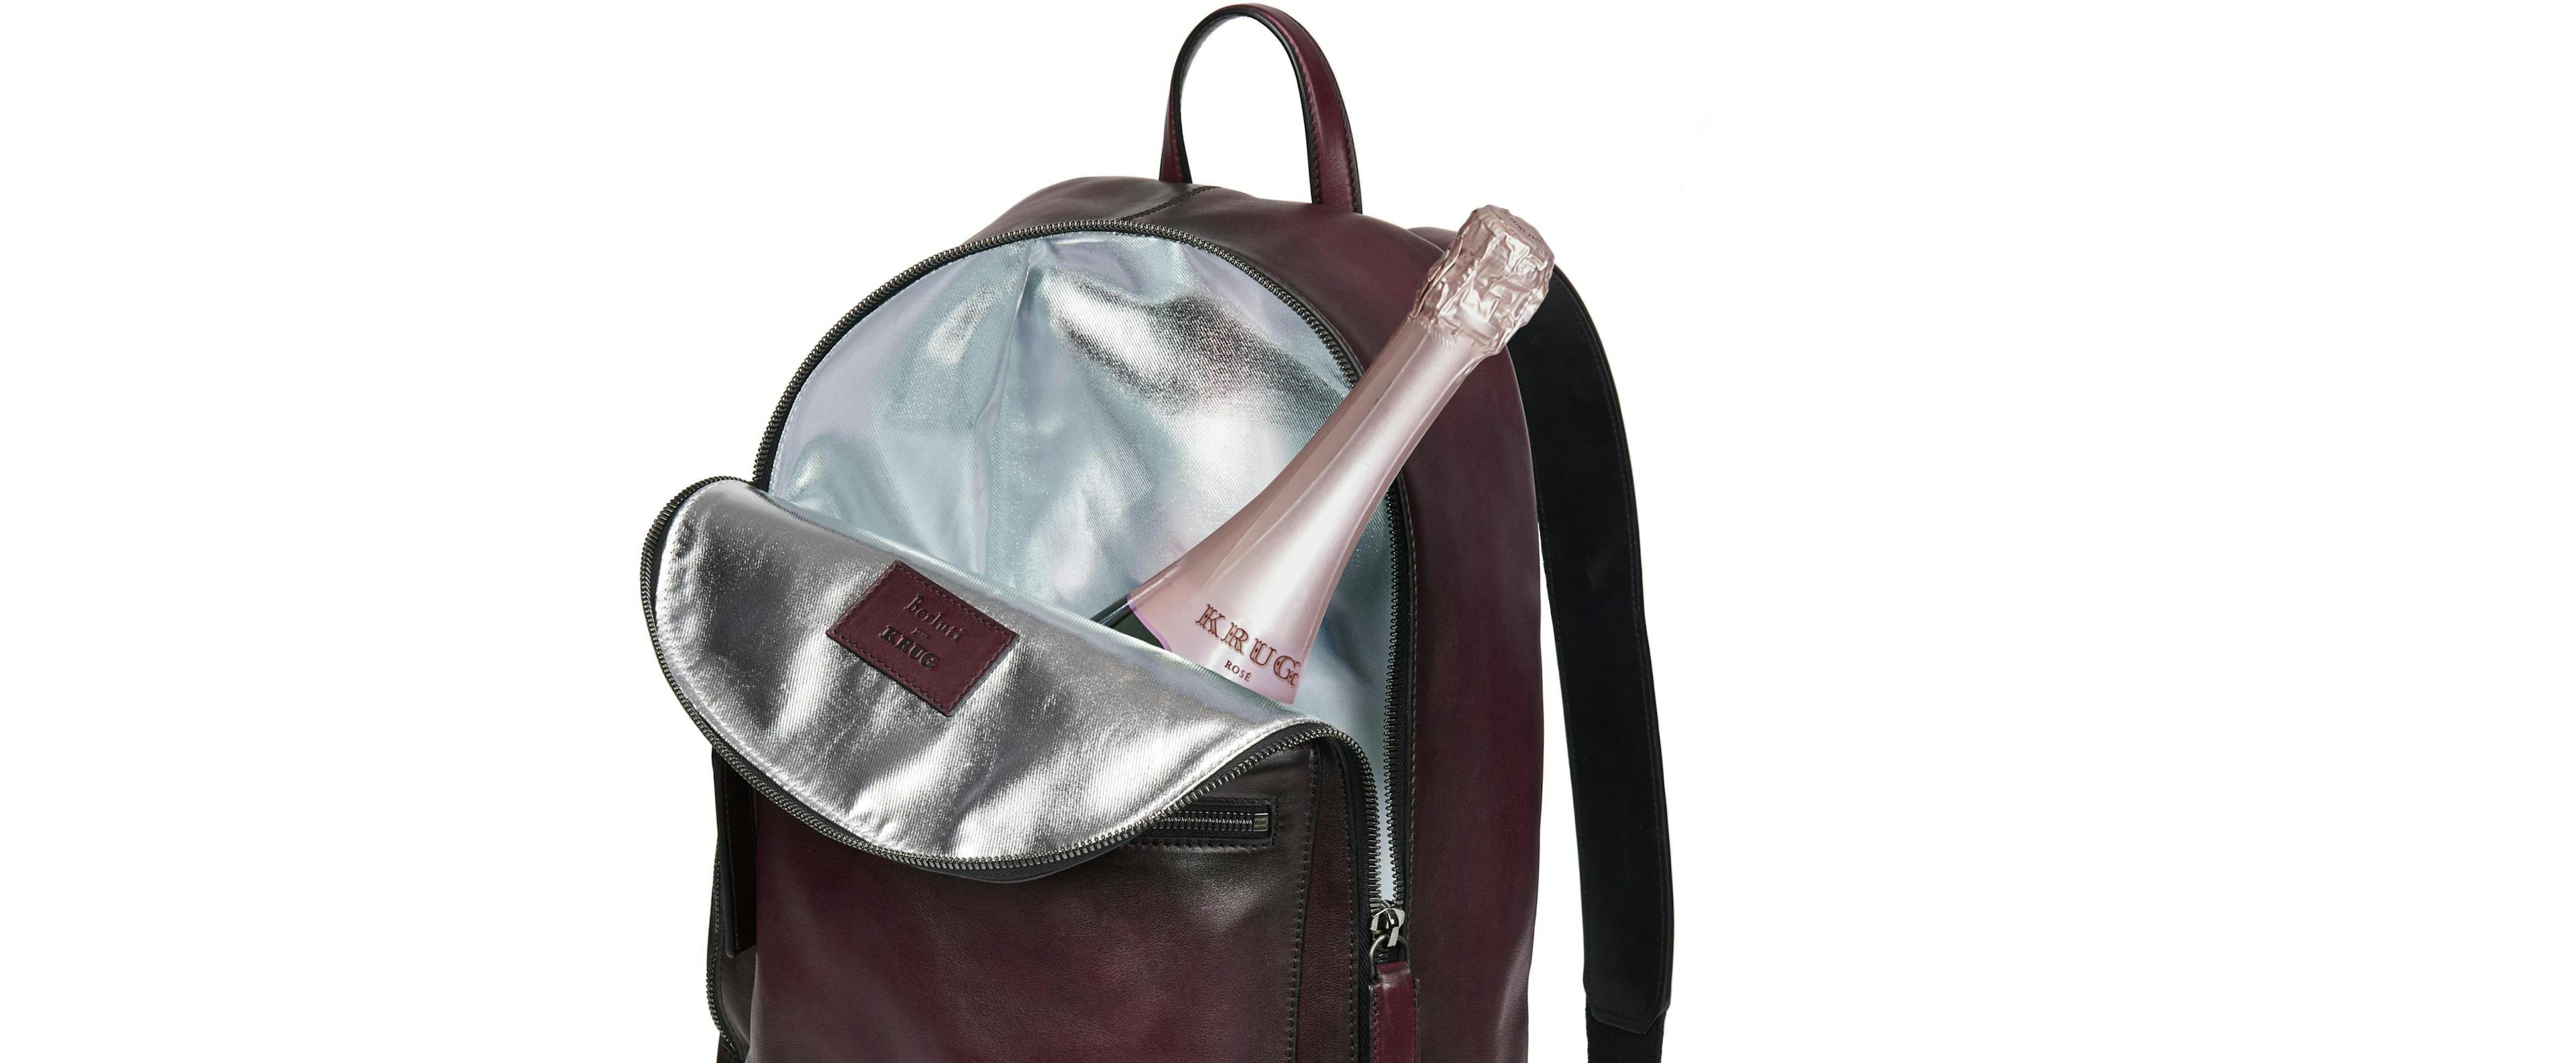 170138 krug r berluti 01 sac a dos ouvert rose bag handbag accessories accessory backpack